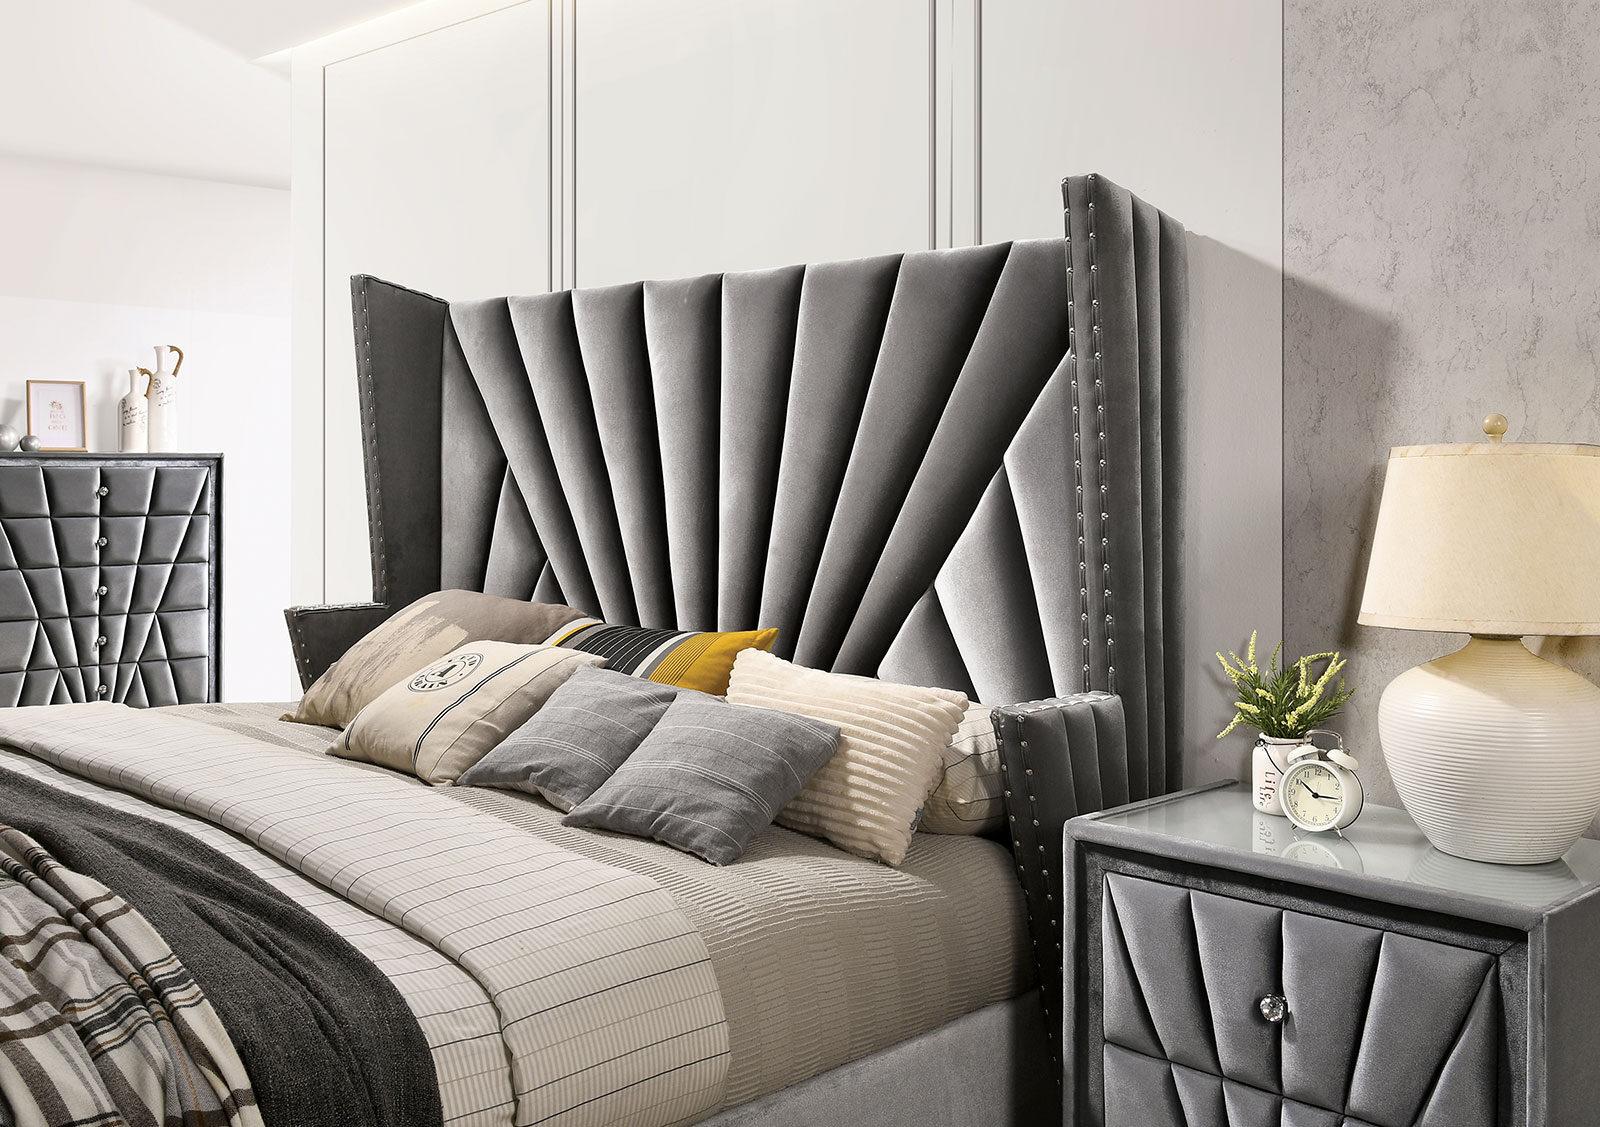 

    
Transitional Gray Solid Wood King Bedroom Set 5pcs Furniture of America CM7164 Carissa
